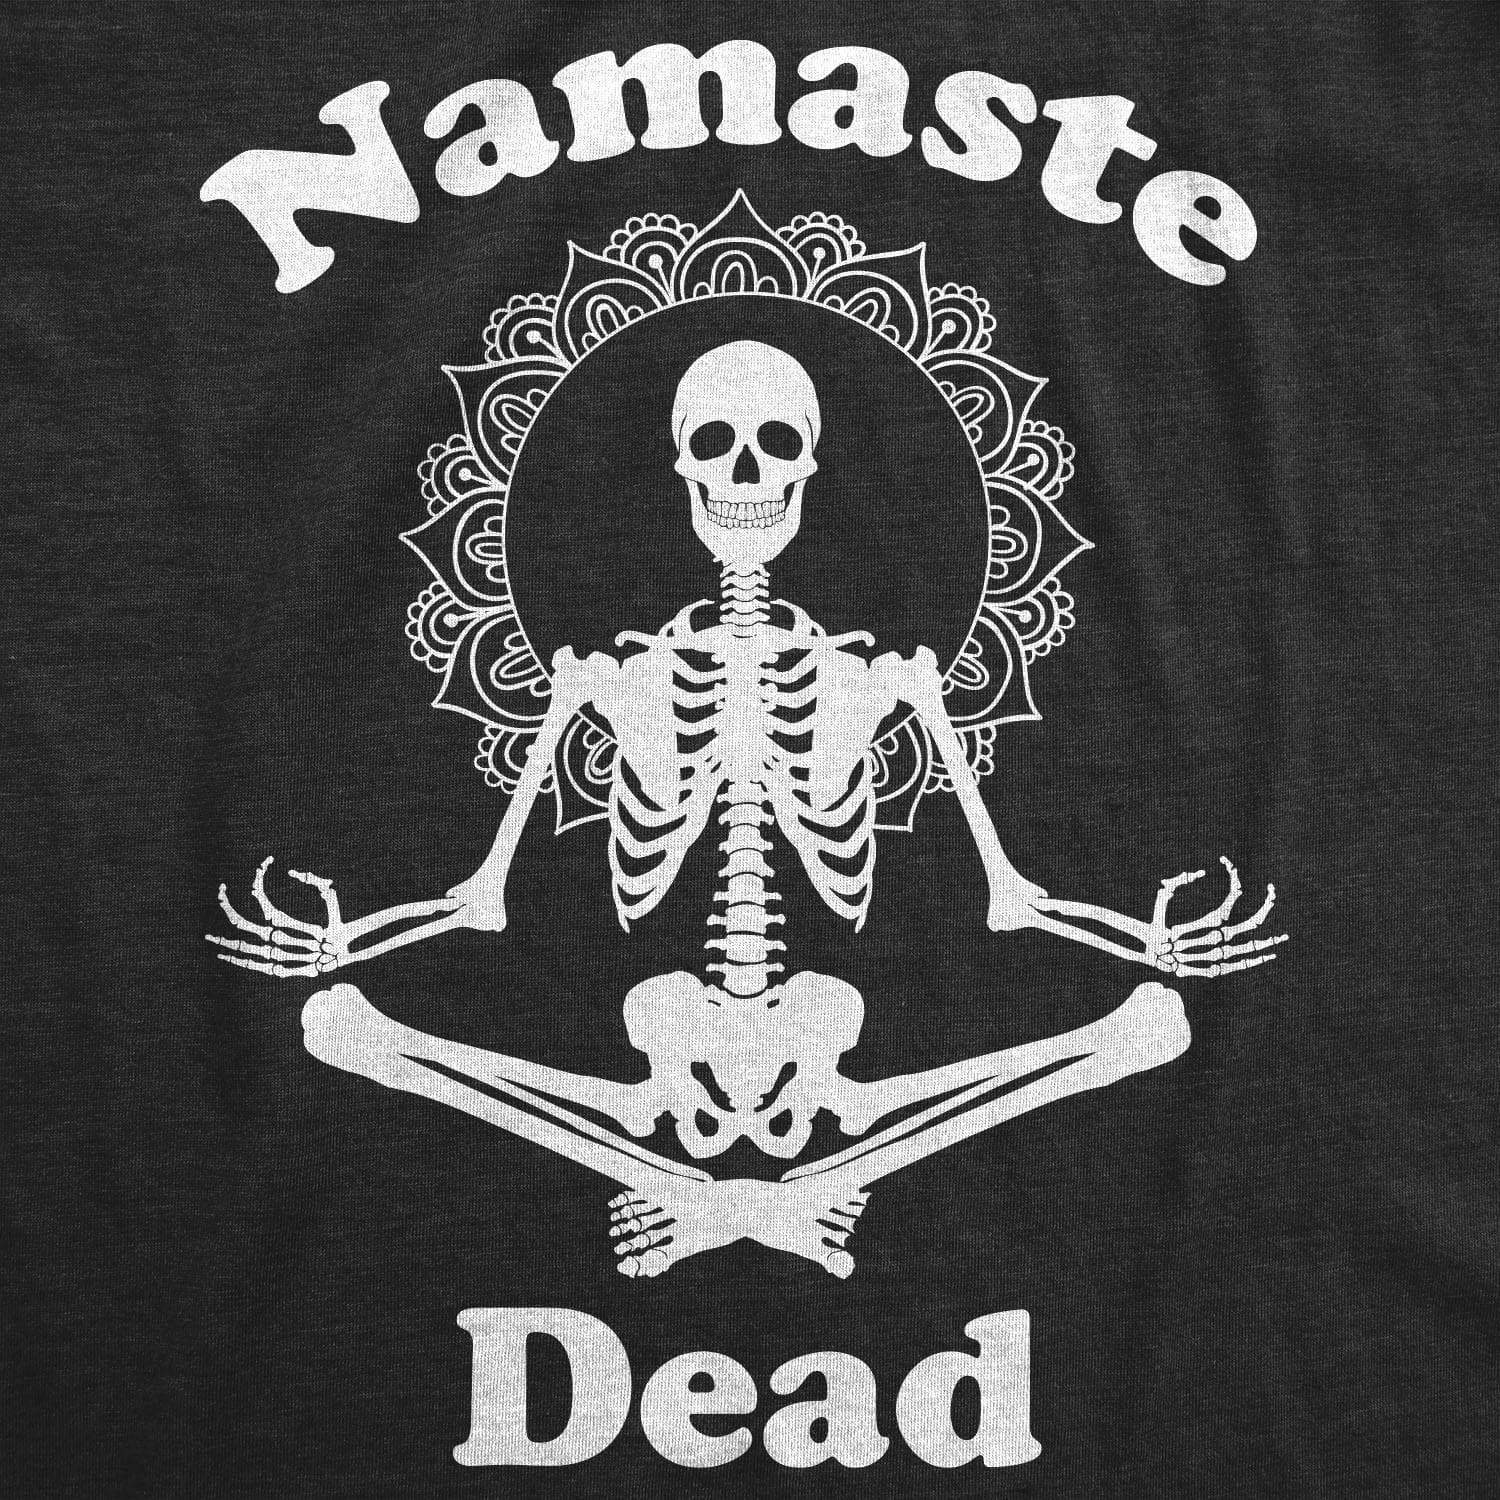 Namaste Dead Women's Tank Top - Crazy Dog T-Shirts